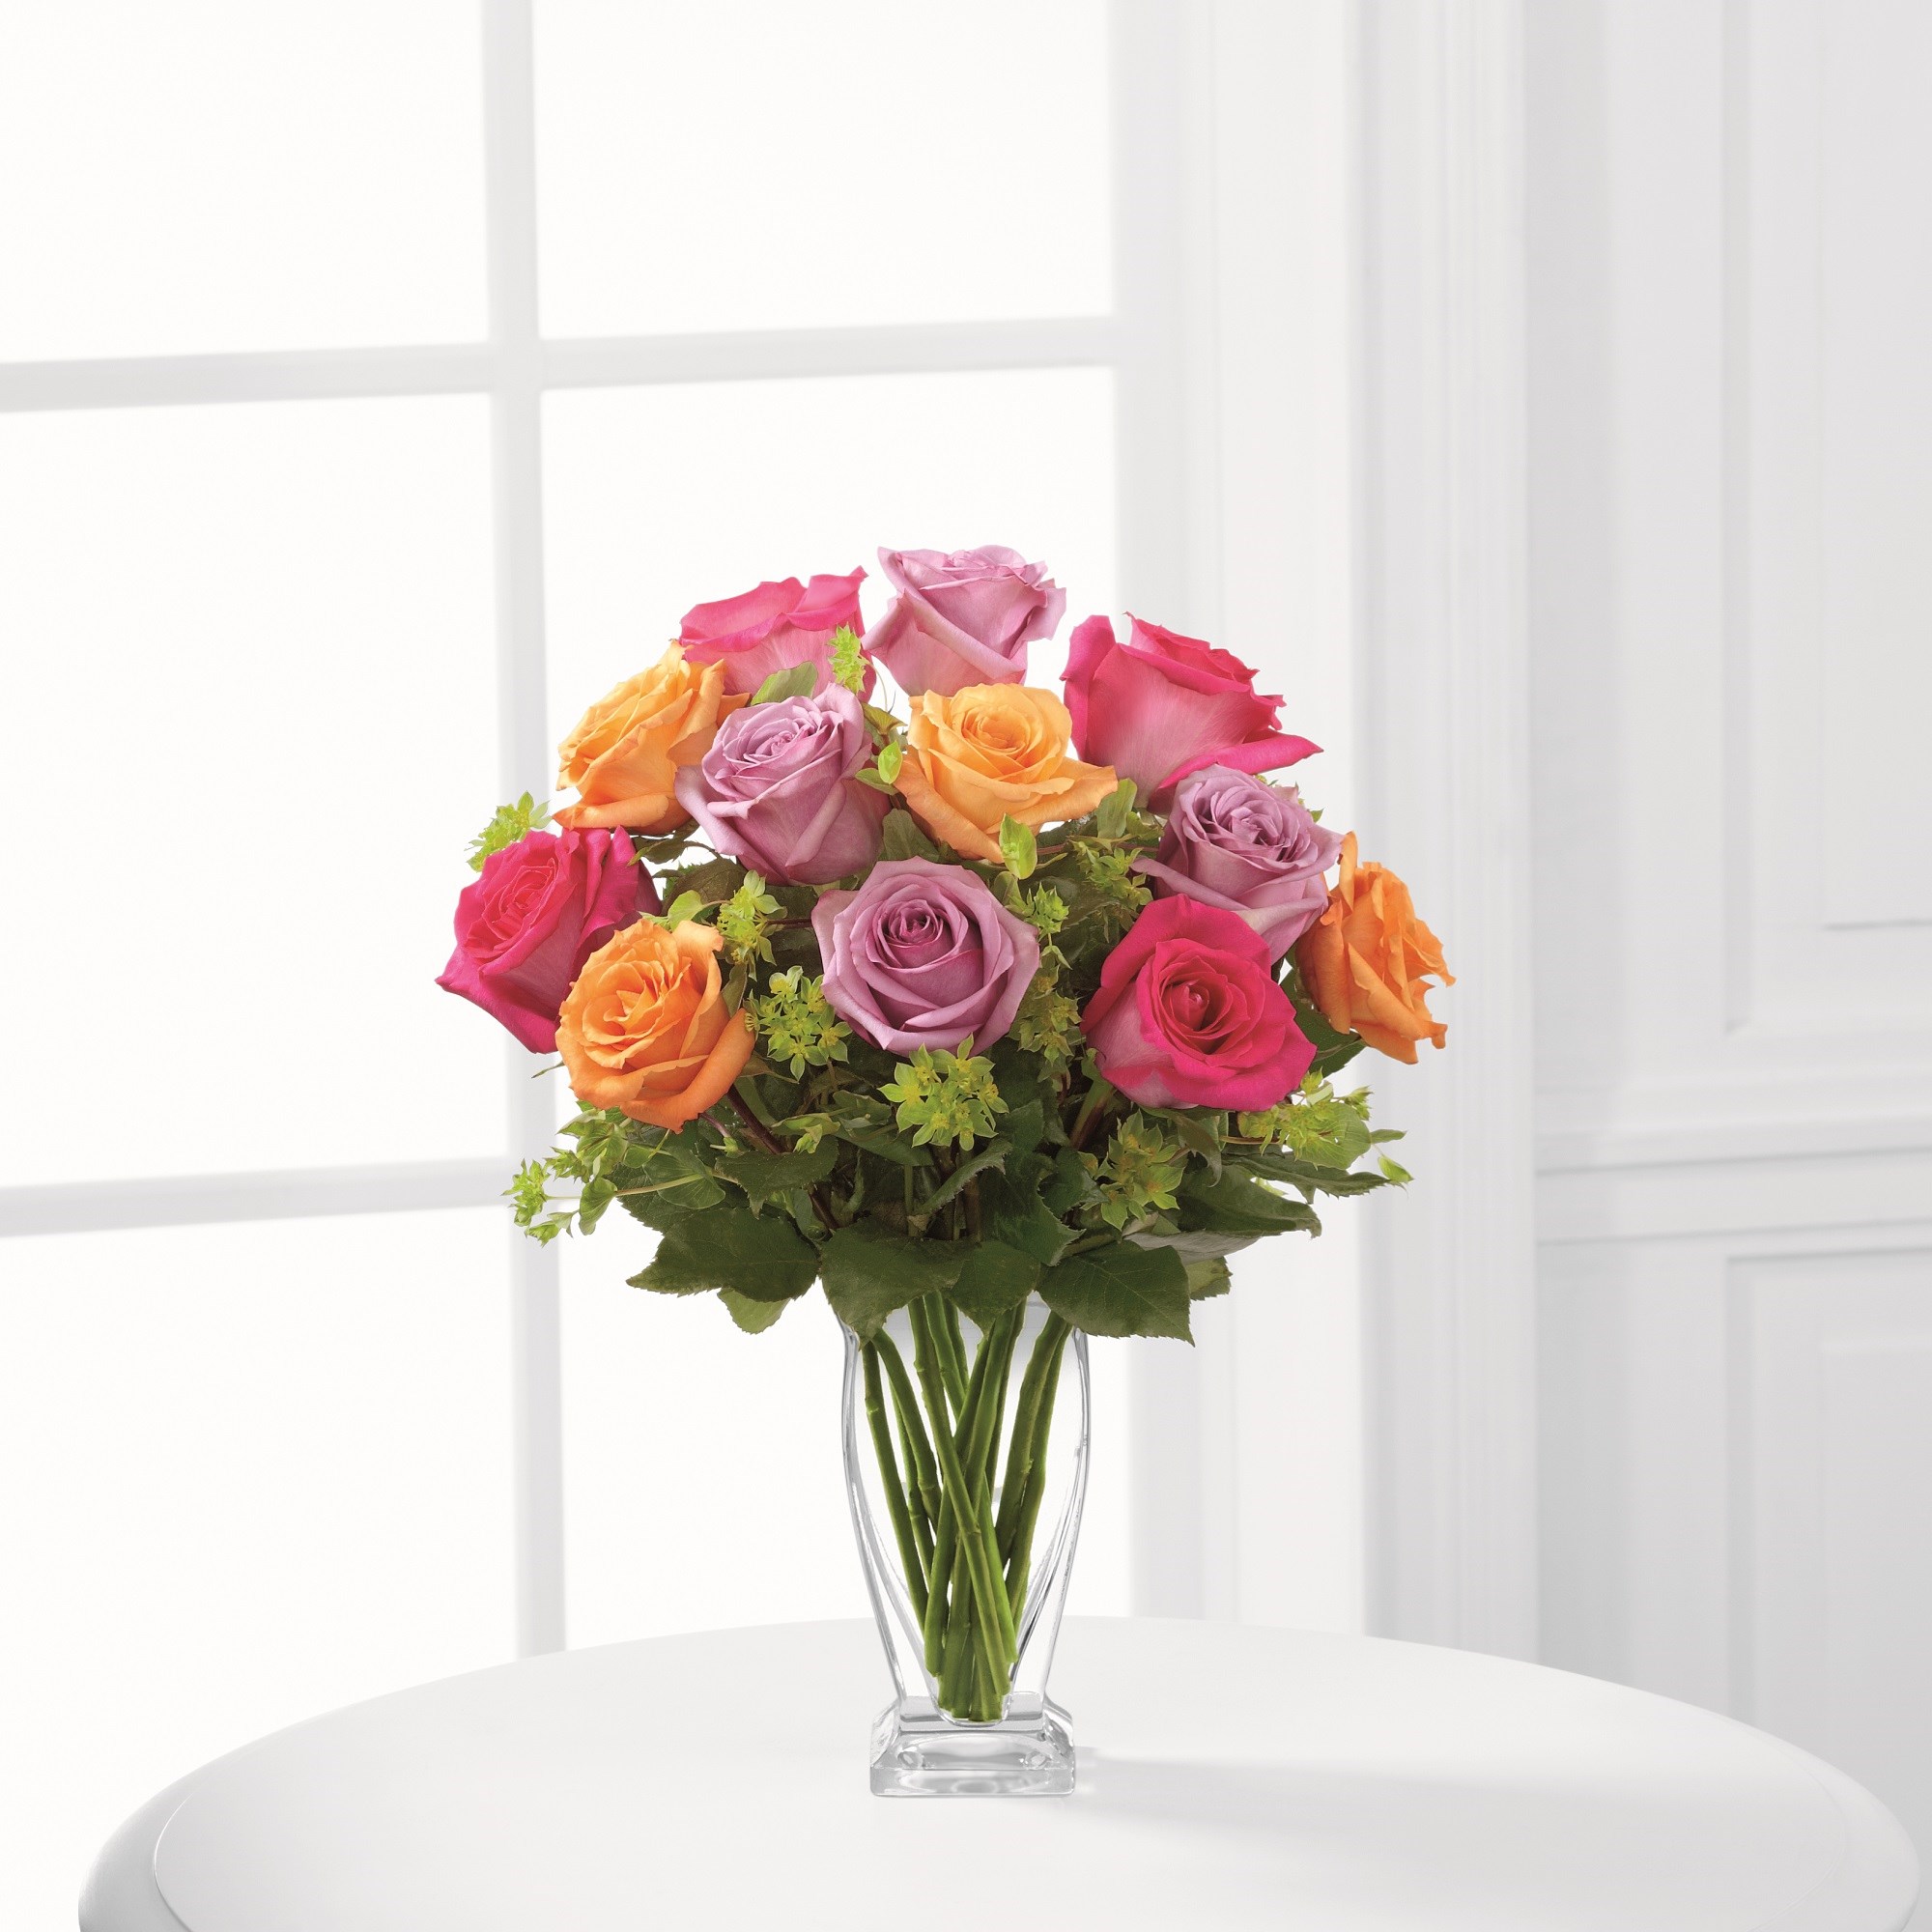 The FTD Pure Enchantment Rose Bouquet